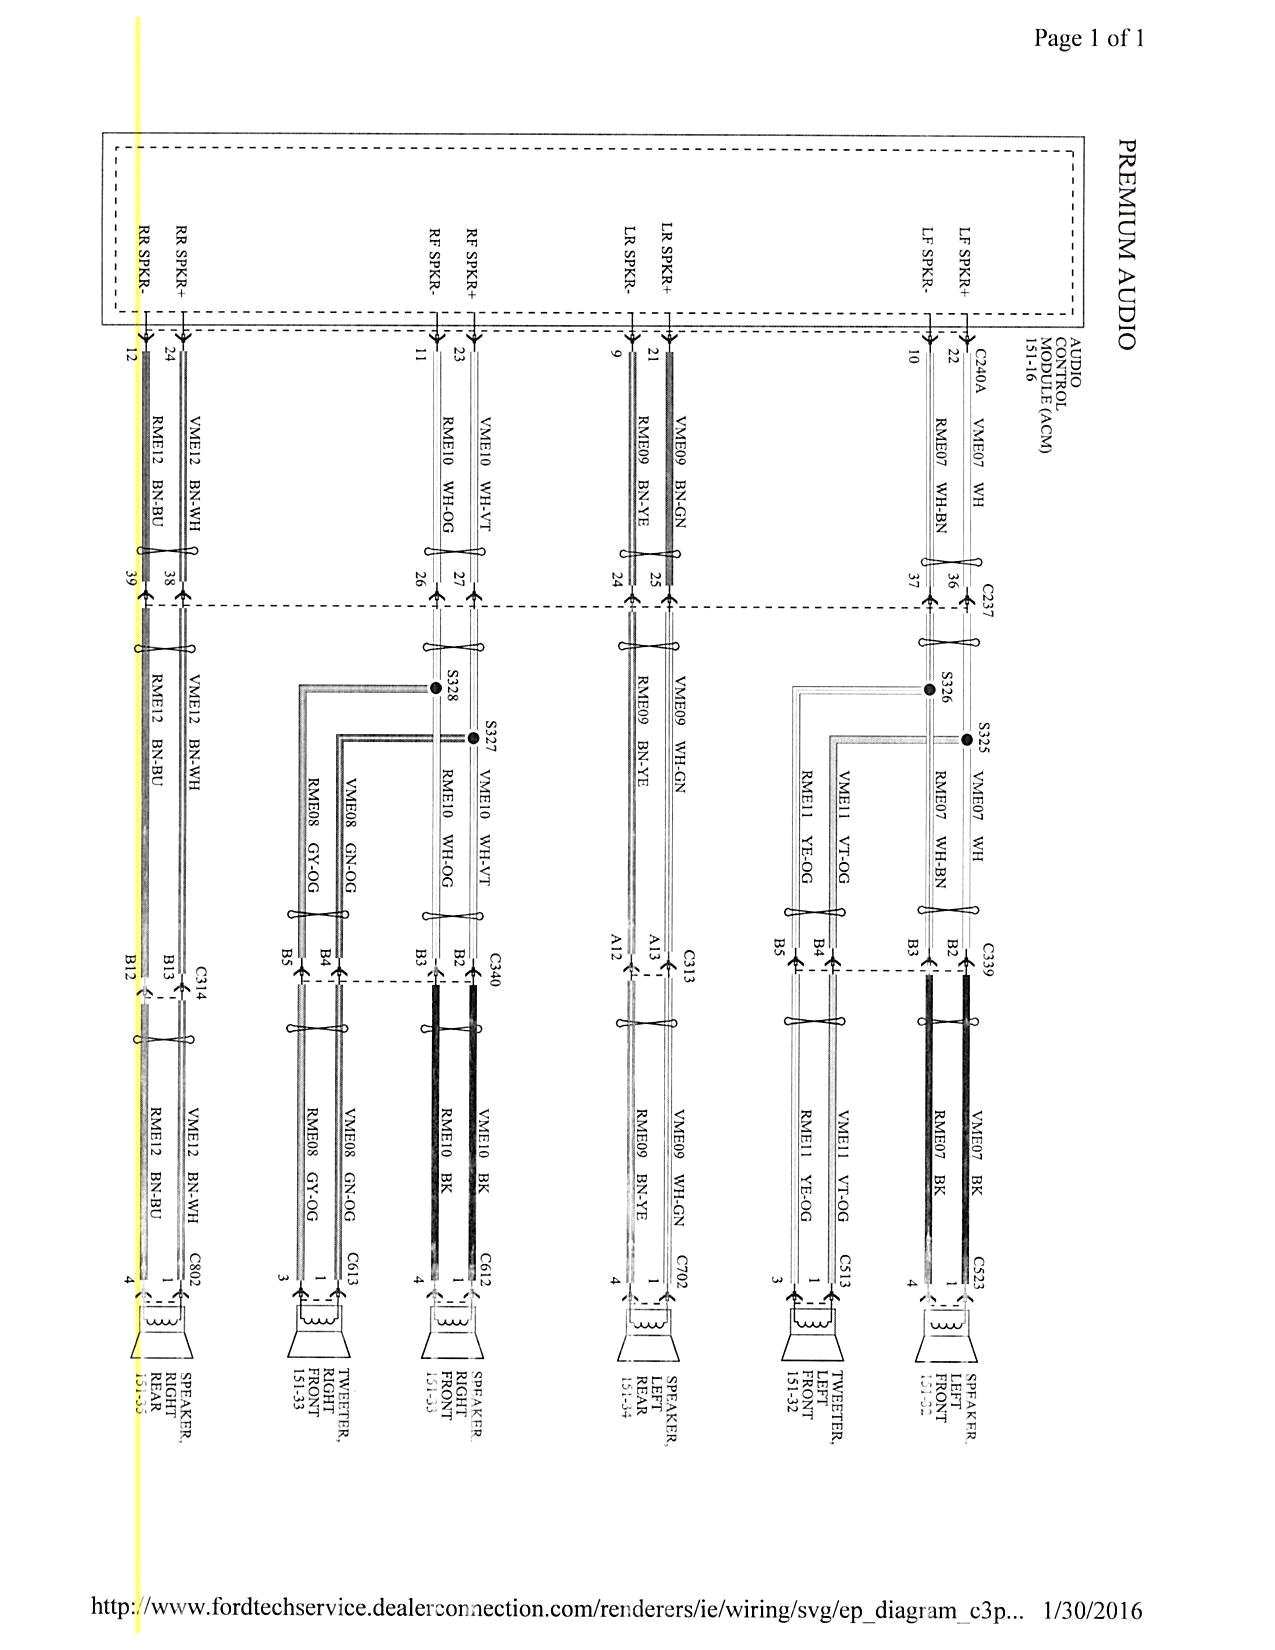 2014 ford fiesta wiring diagram